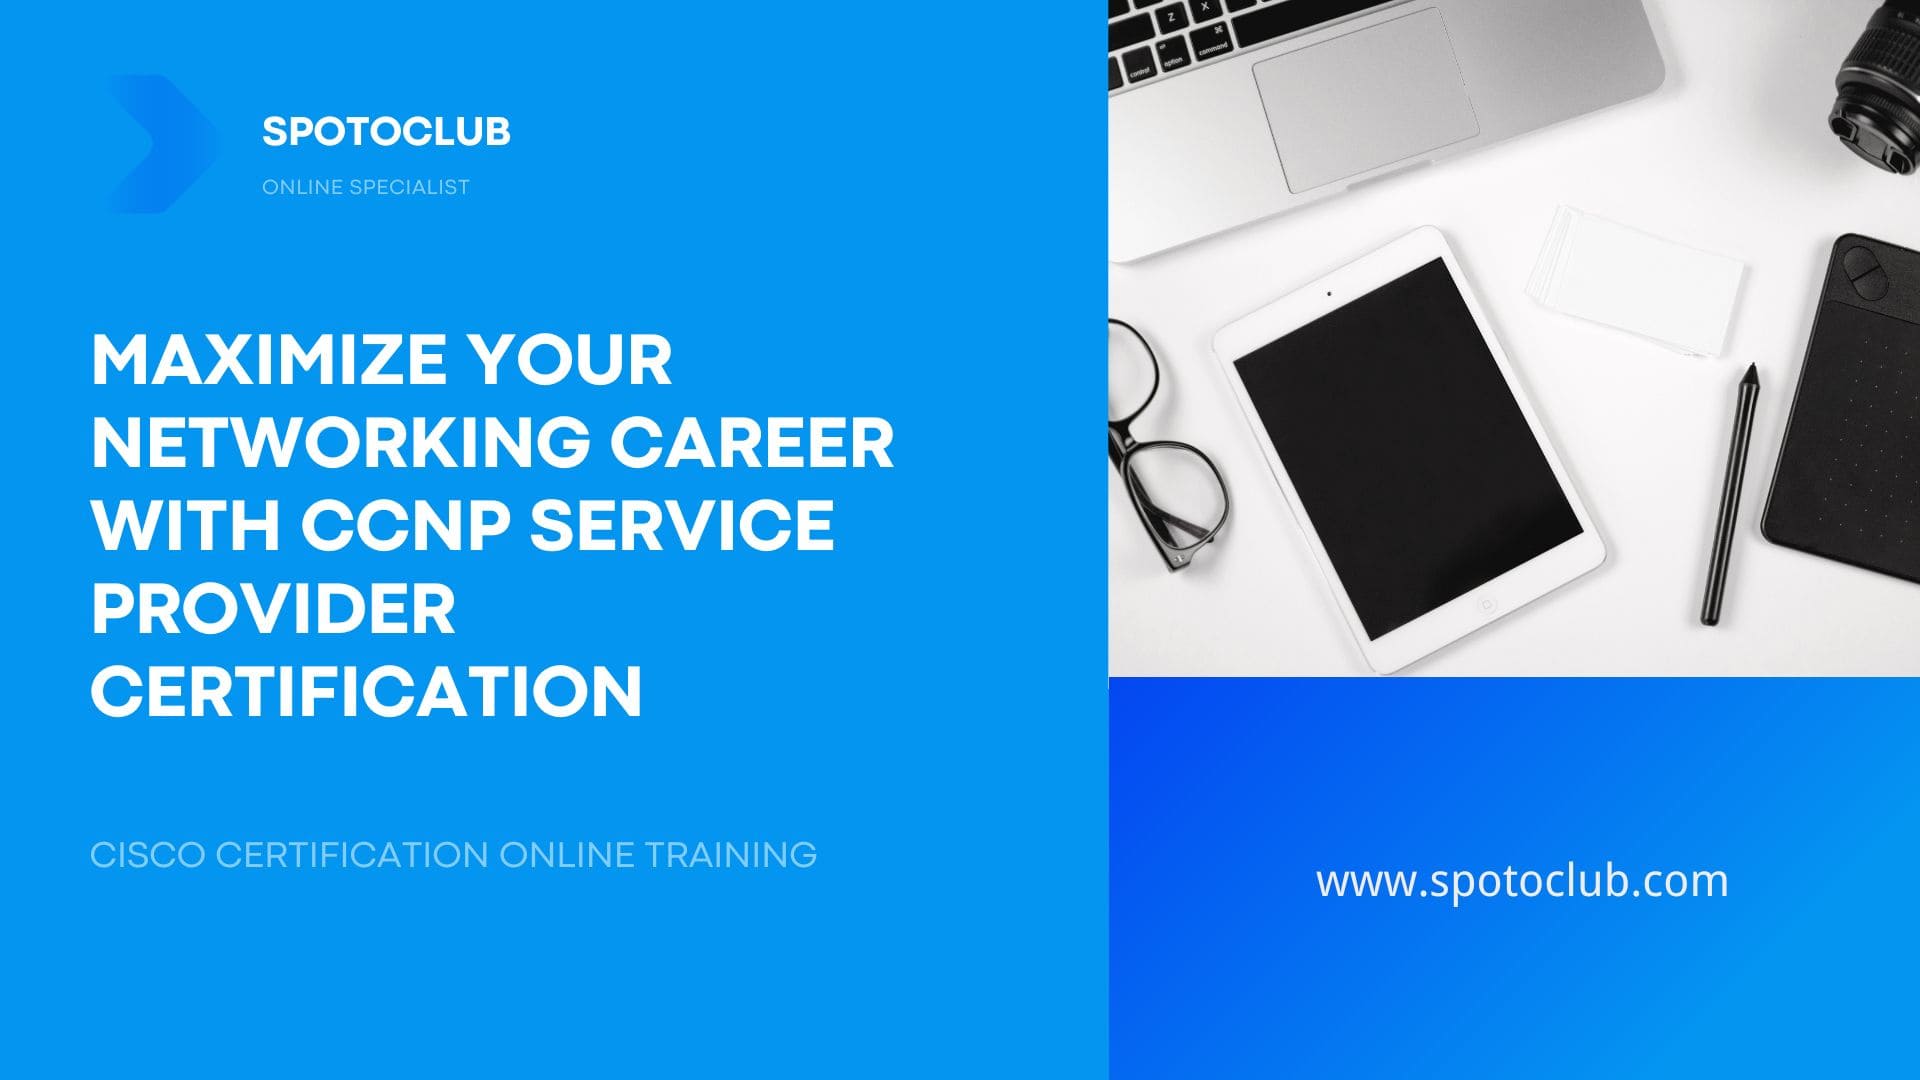 CCNP Service Provider Certification